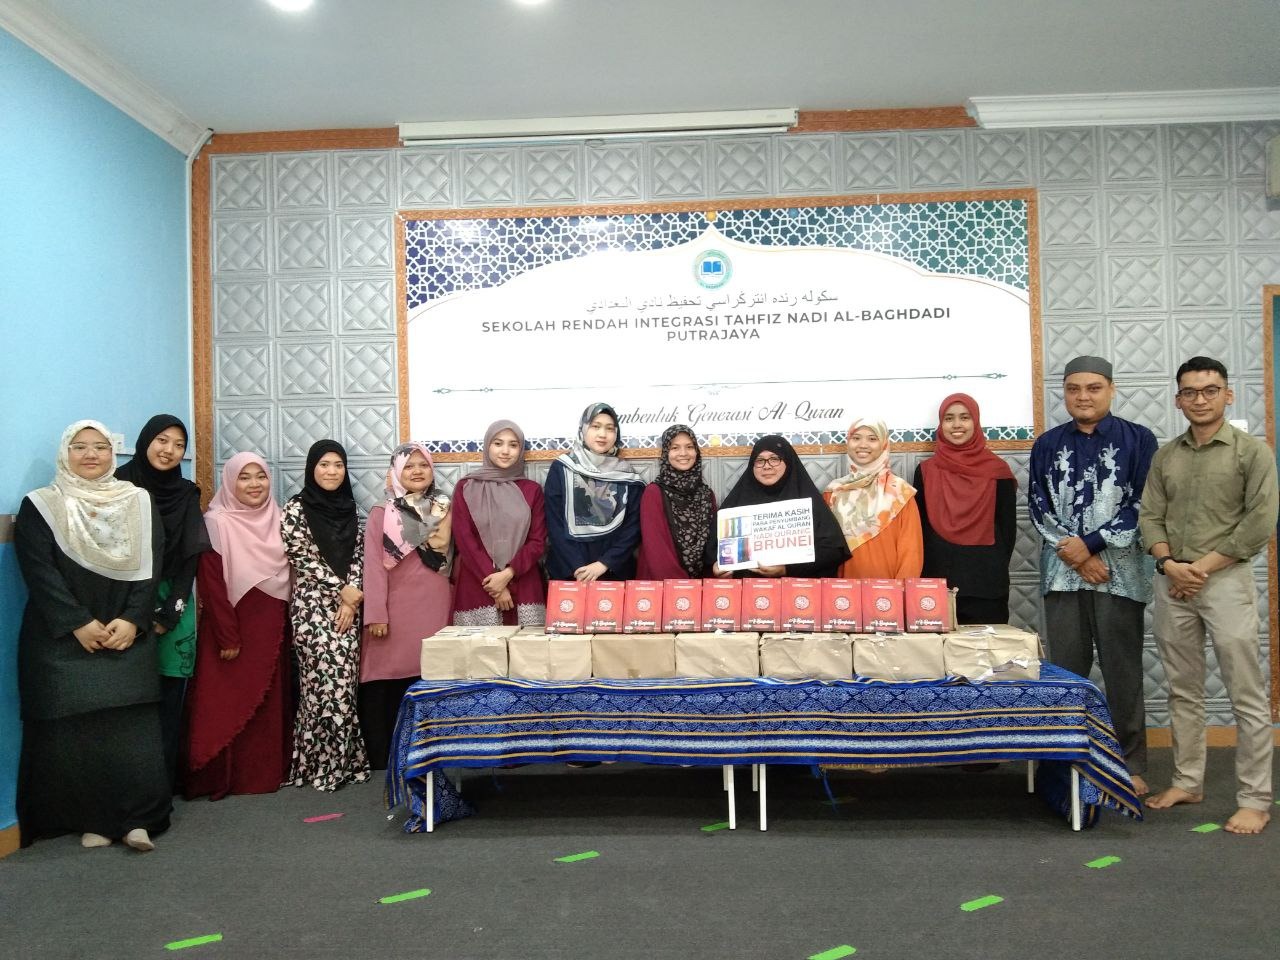 Sumbangan 200 naskah Wakaf Al Quran kepada anak tahfiz Putrajaya